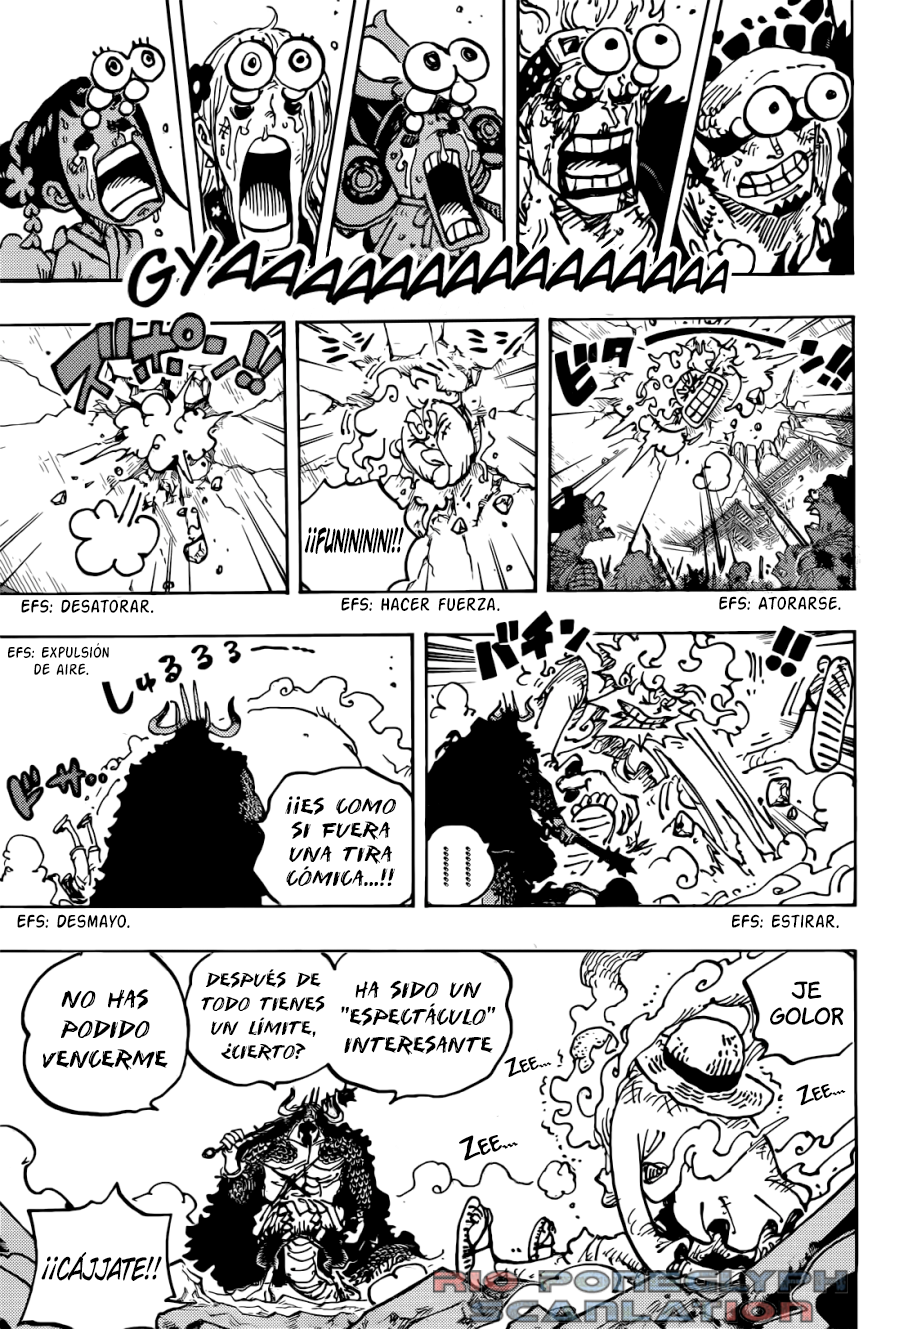 1026 - One Piece Manga 1045 [Español] [Rio Poneglyph Scans] Jnu3qAwA_o